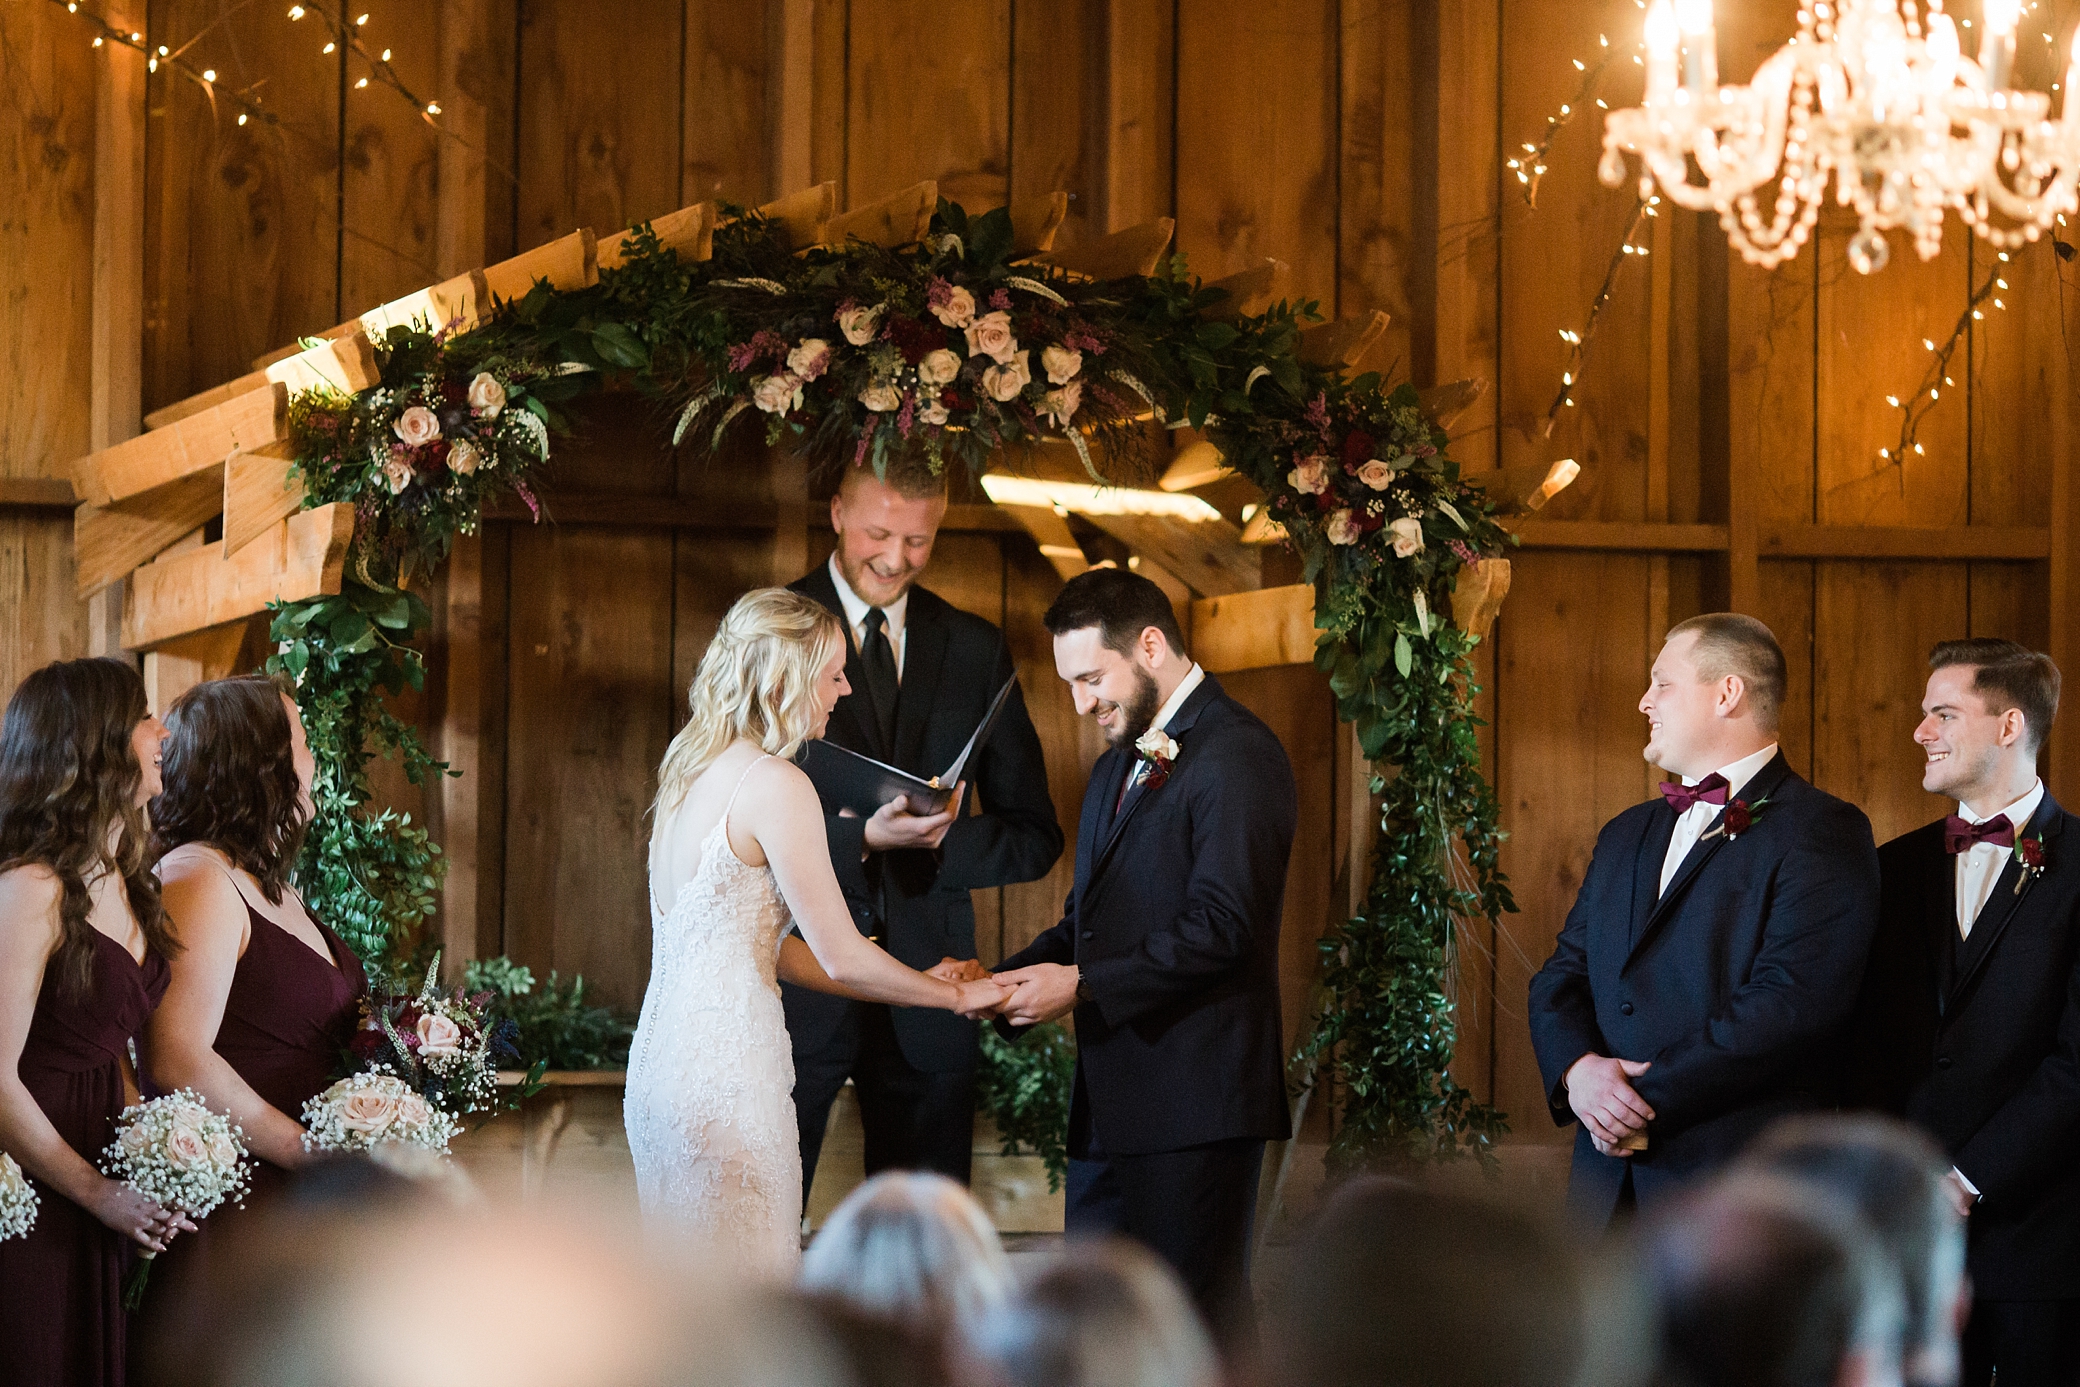 Vows during Wedding Ceremony | Megan Montalvo Photography 